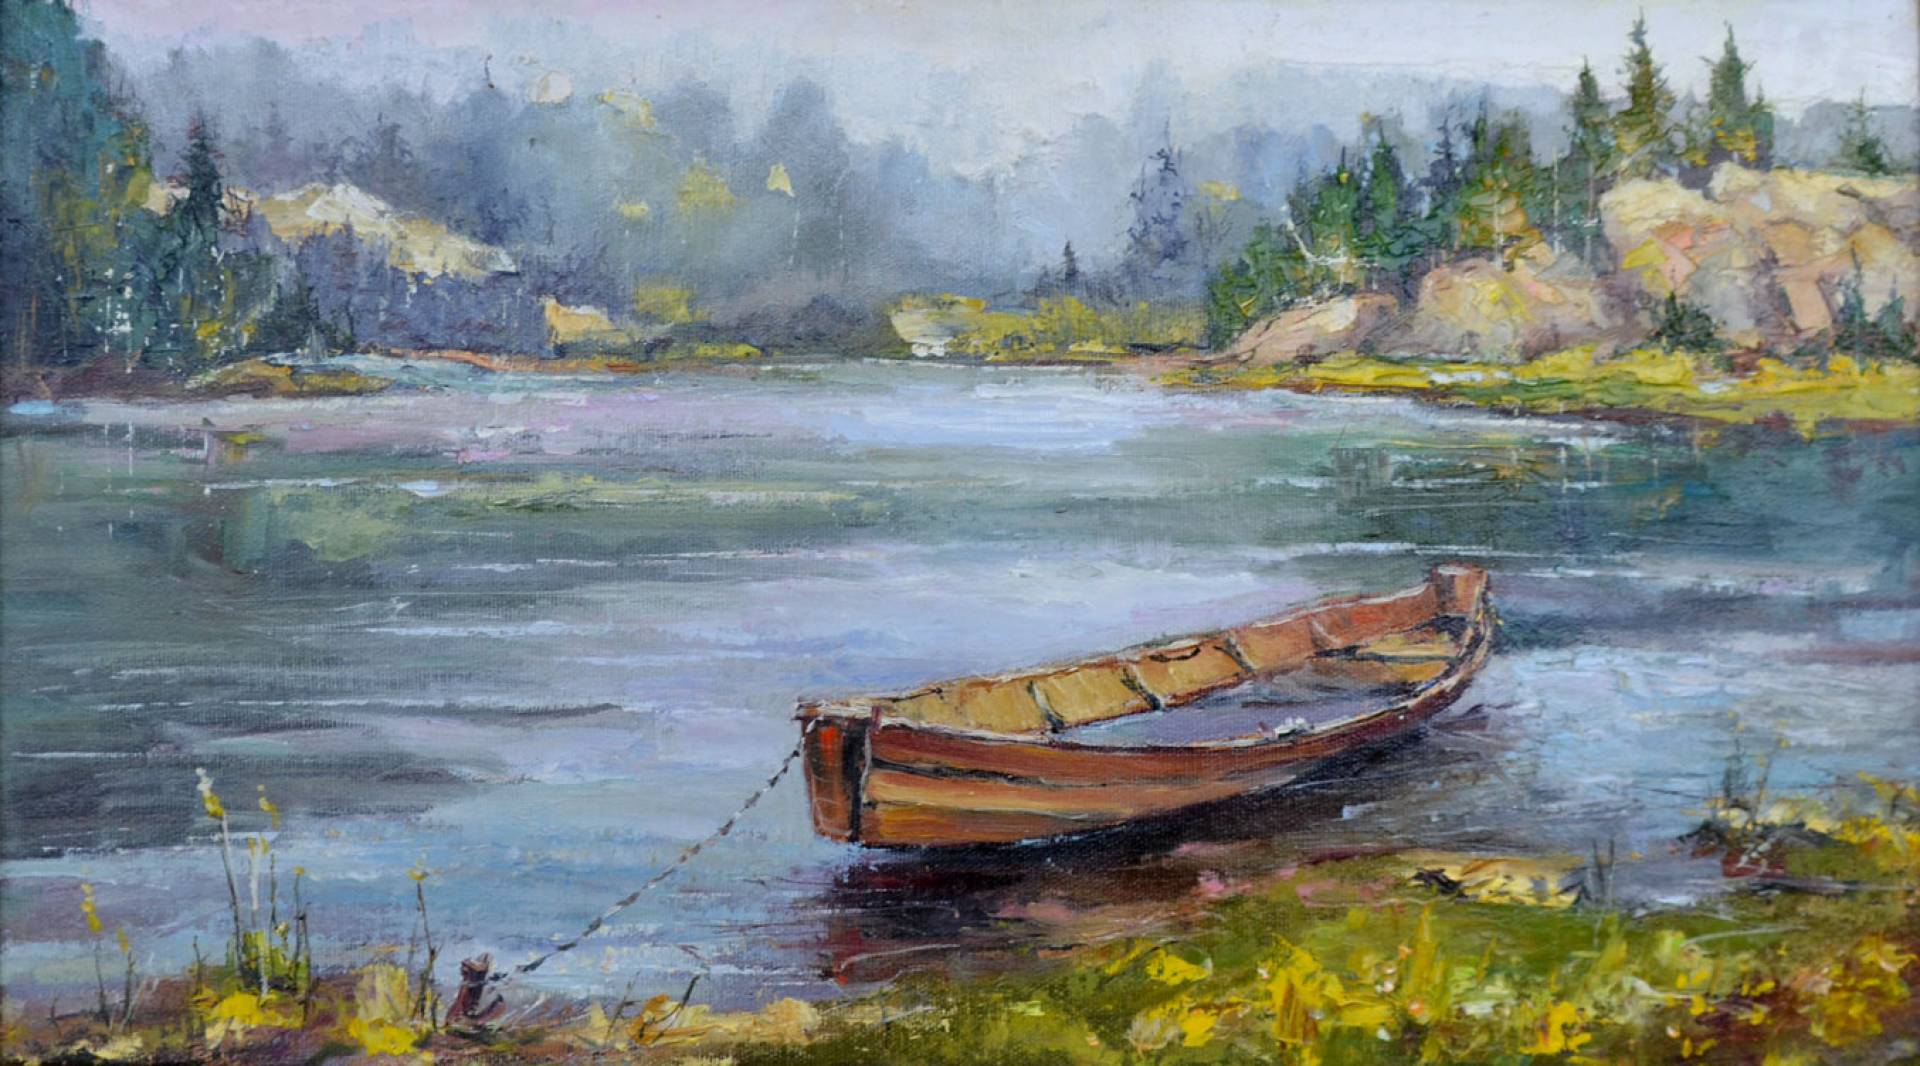 Boat - 1, Evgeny Loskutov, Buy the painting Oil